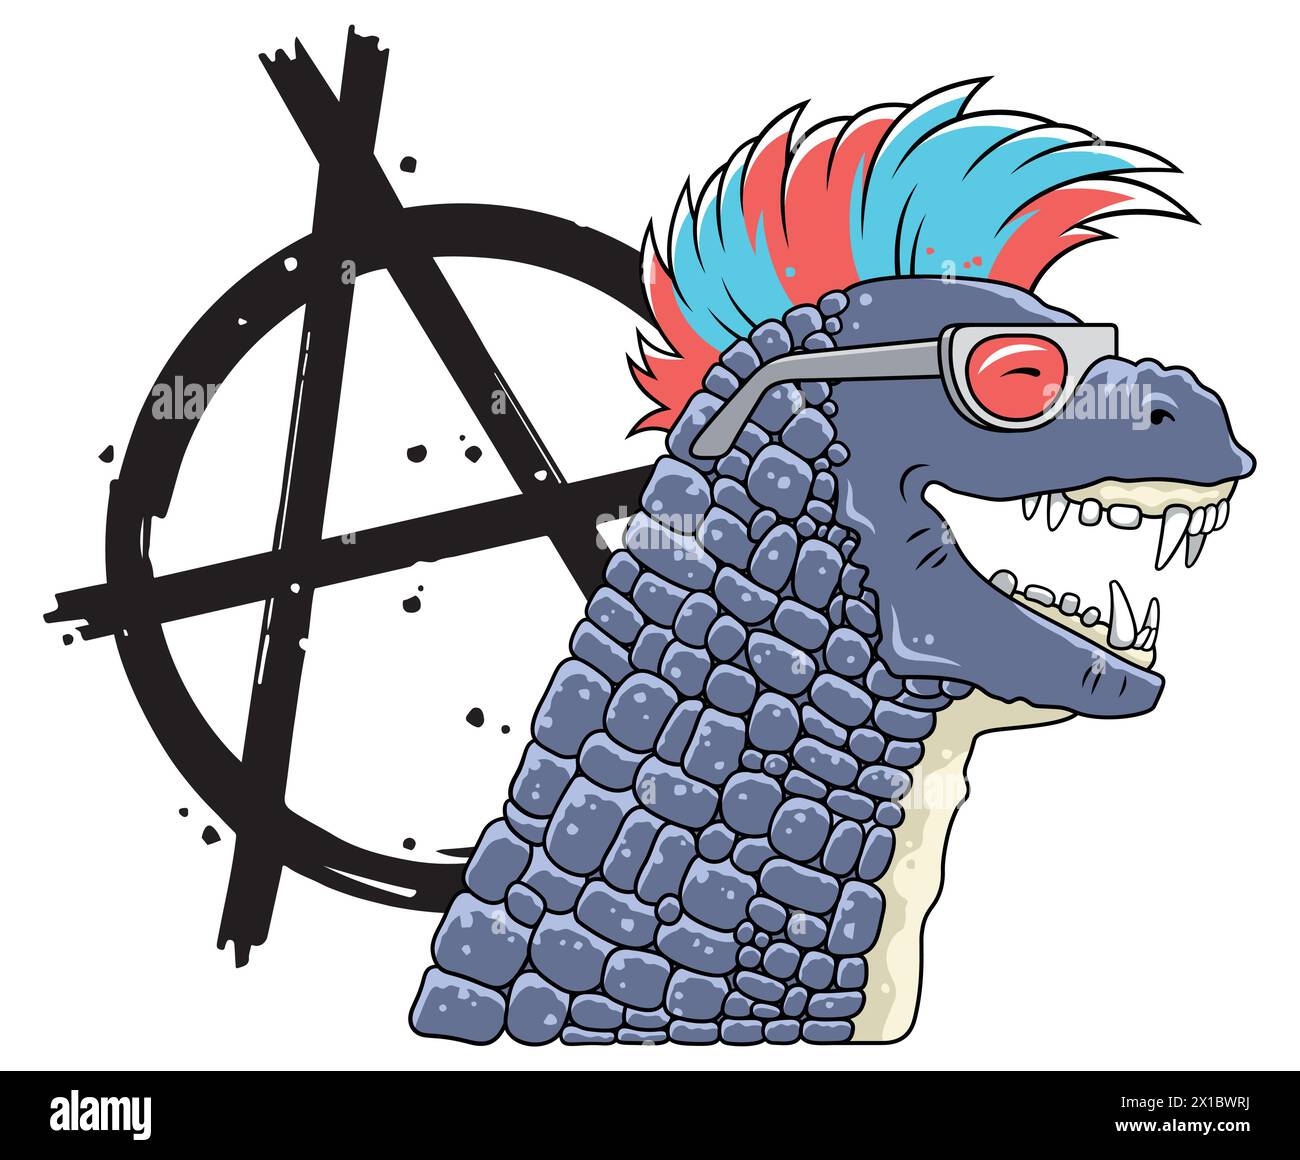 Dinosaurier im Punk Rock-Stil für Kinder. Vektor-Illustration des Dino- und Punkanarchie-Symbols Stock Vektor